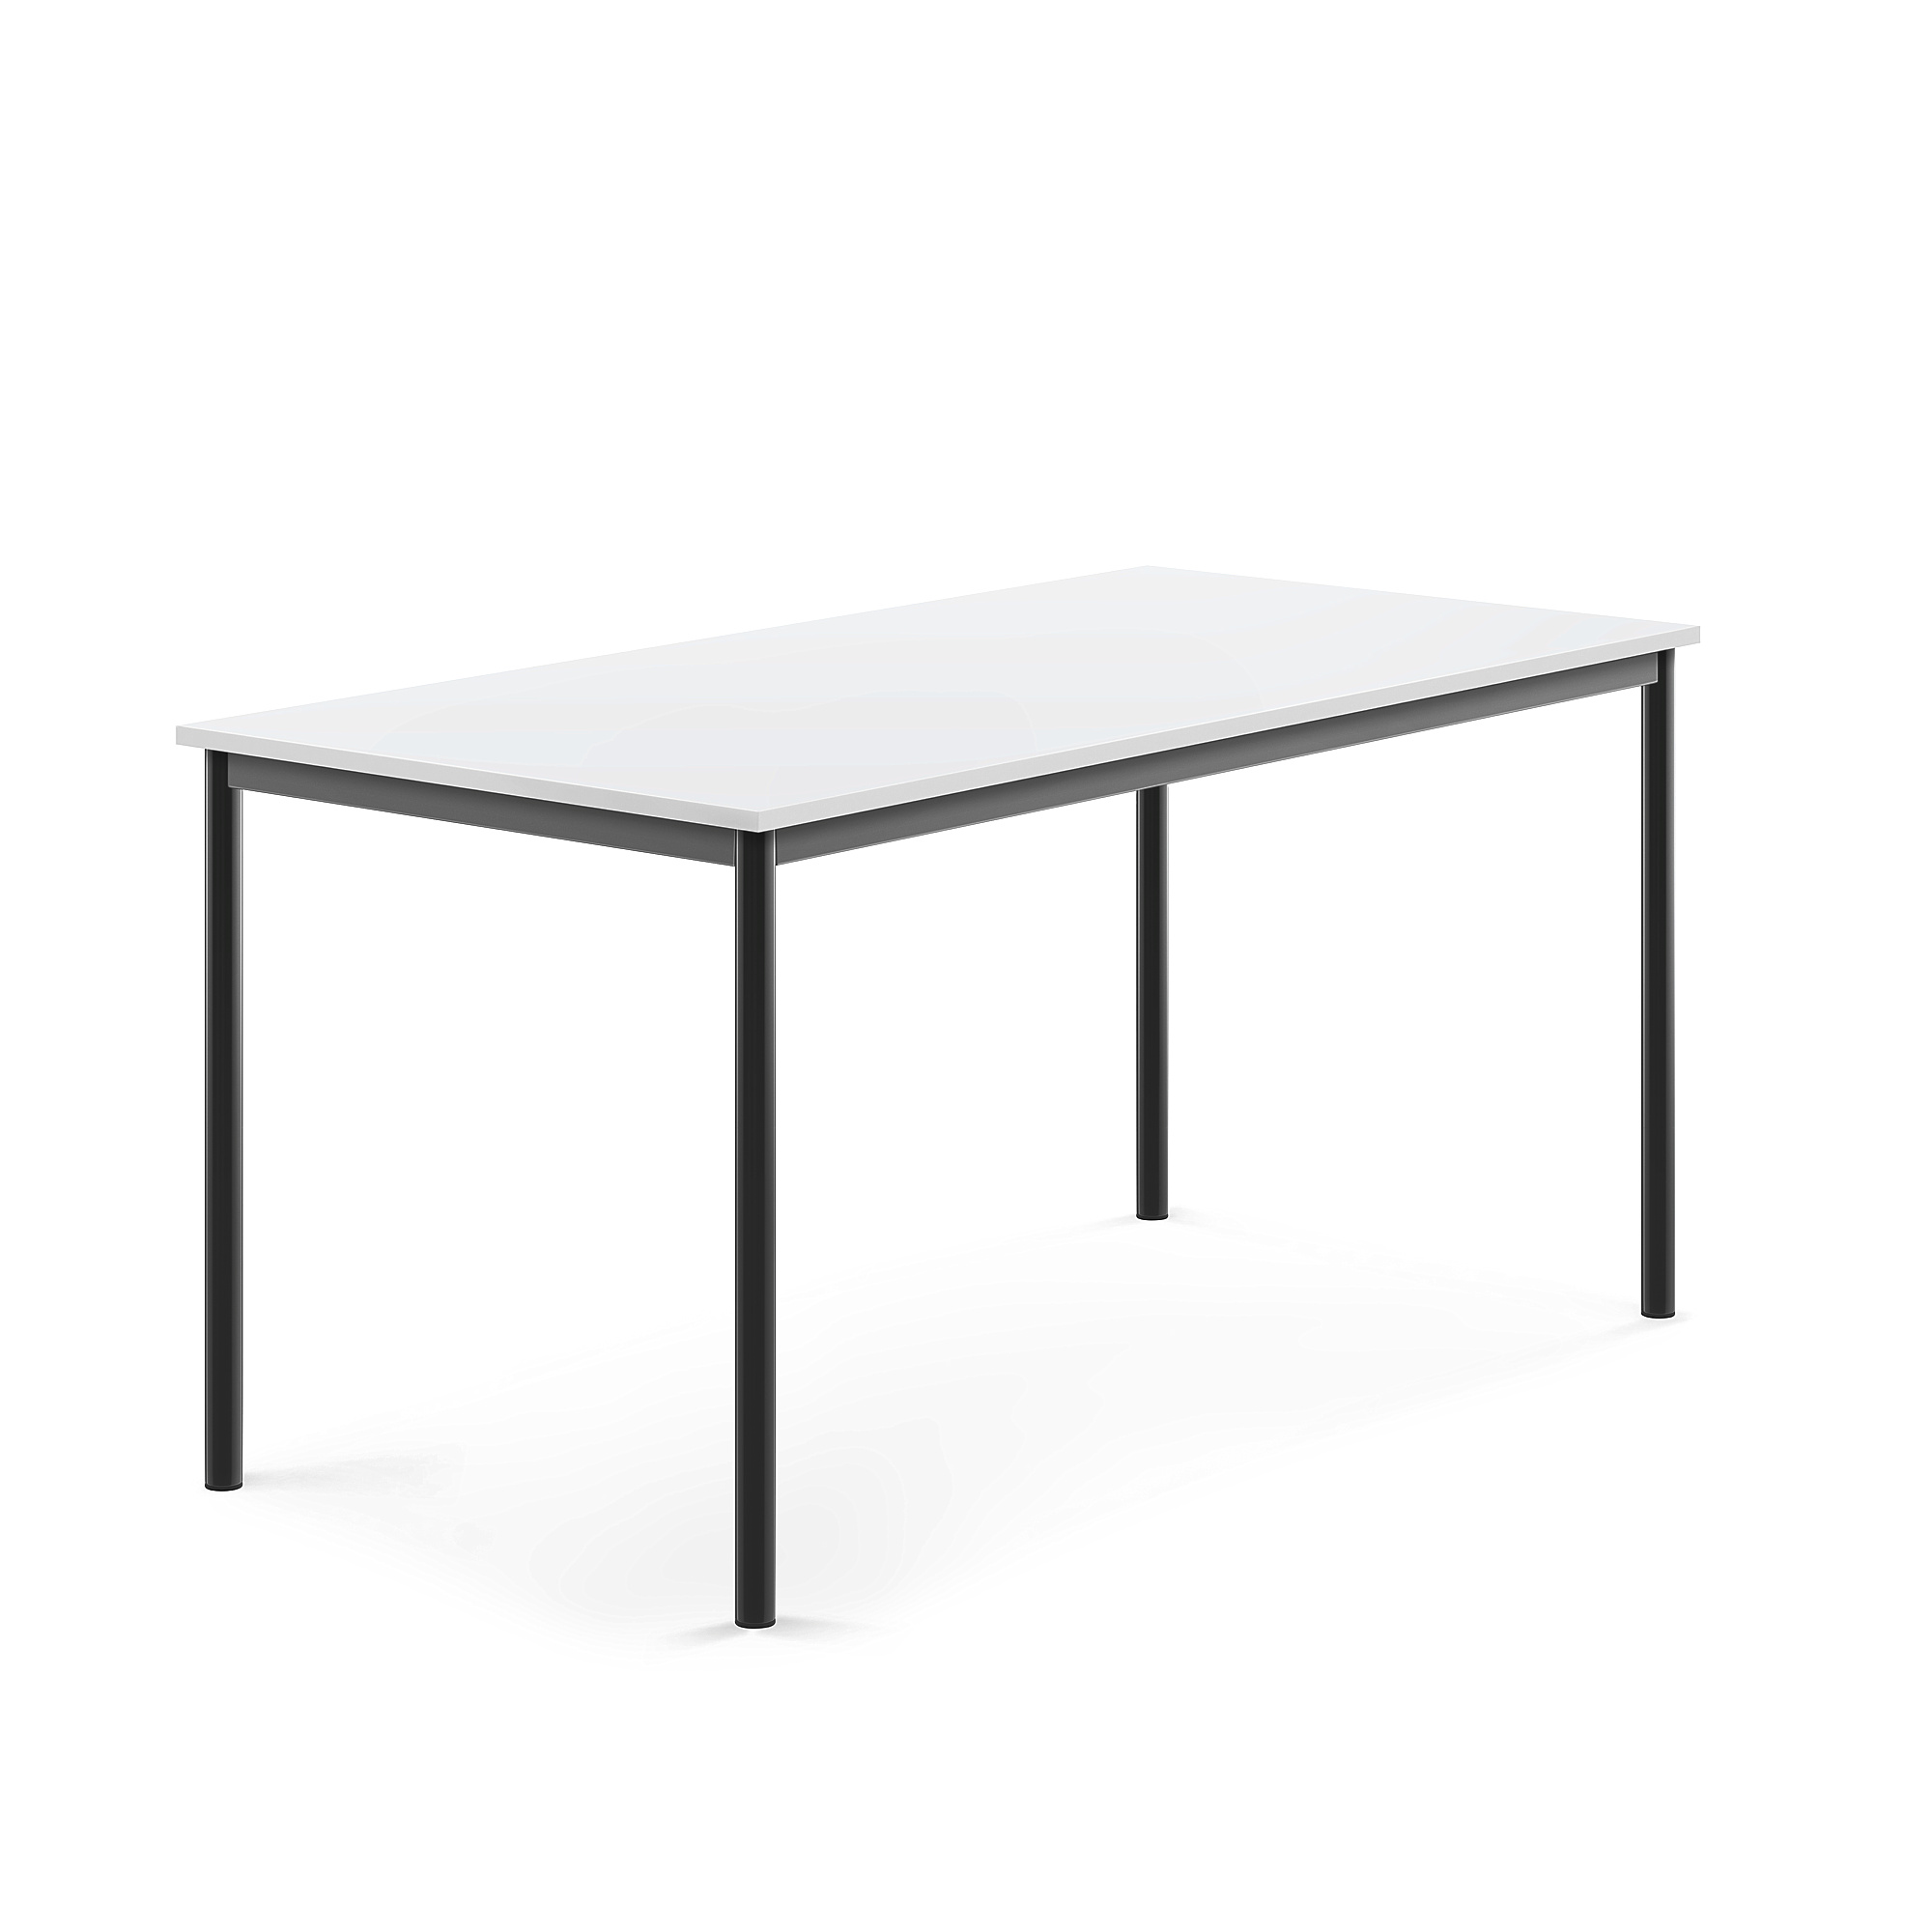 Stůl BORÅS, 1600x800x760 mm, antracitově šedé nohy, HPL deska, bílá